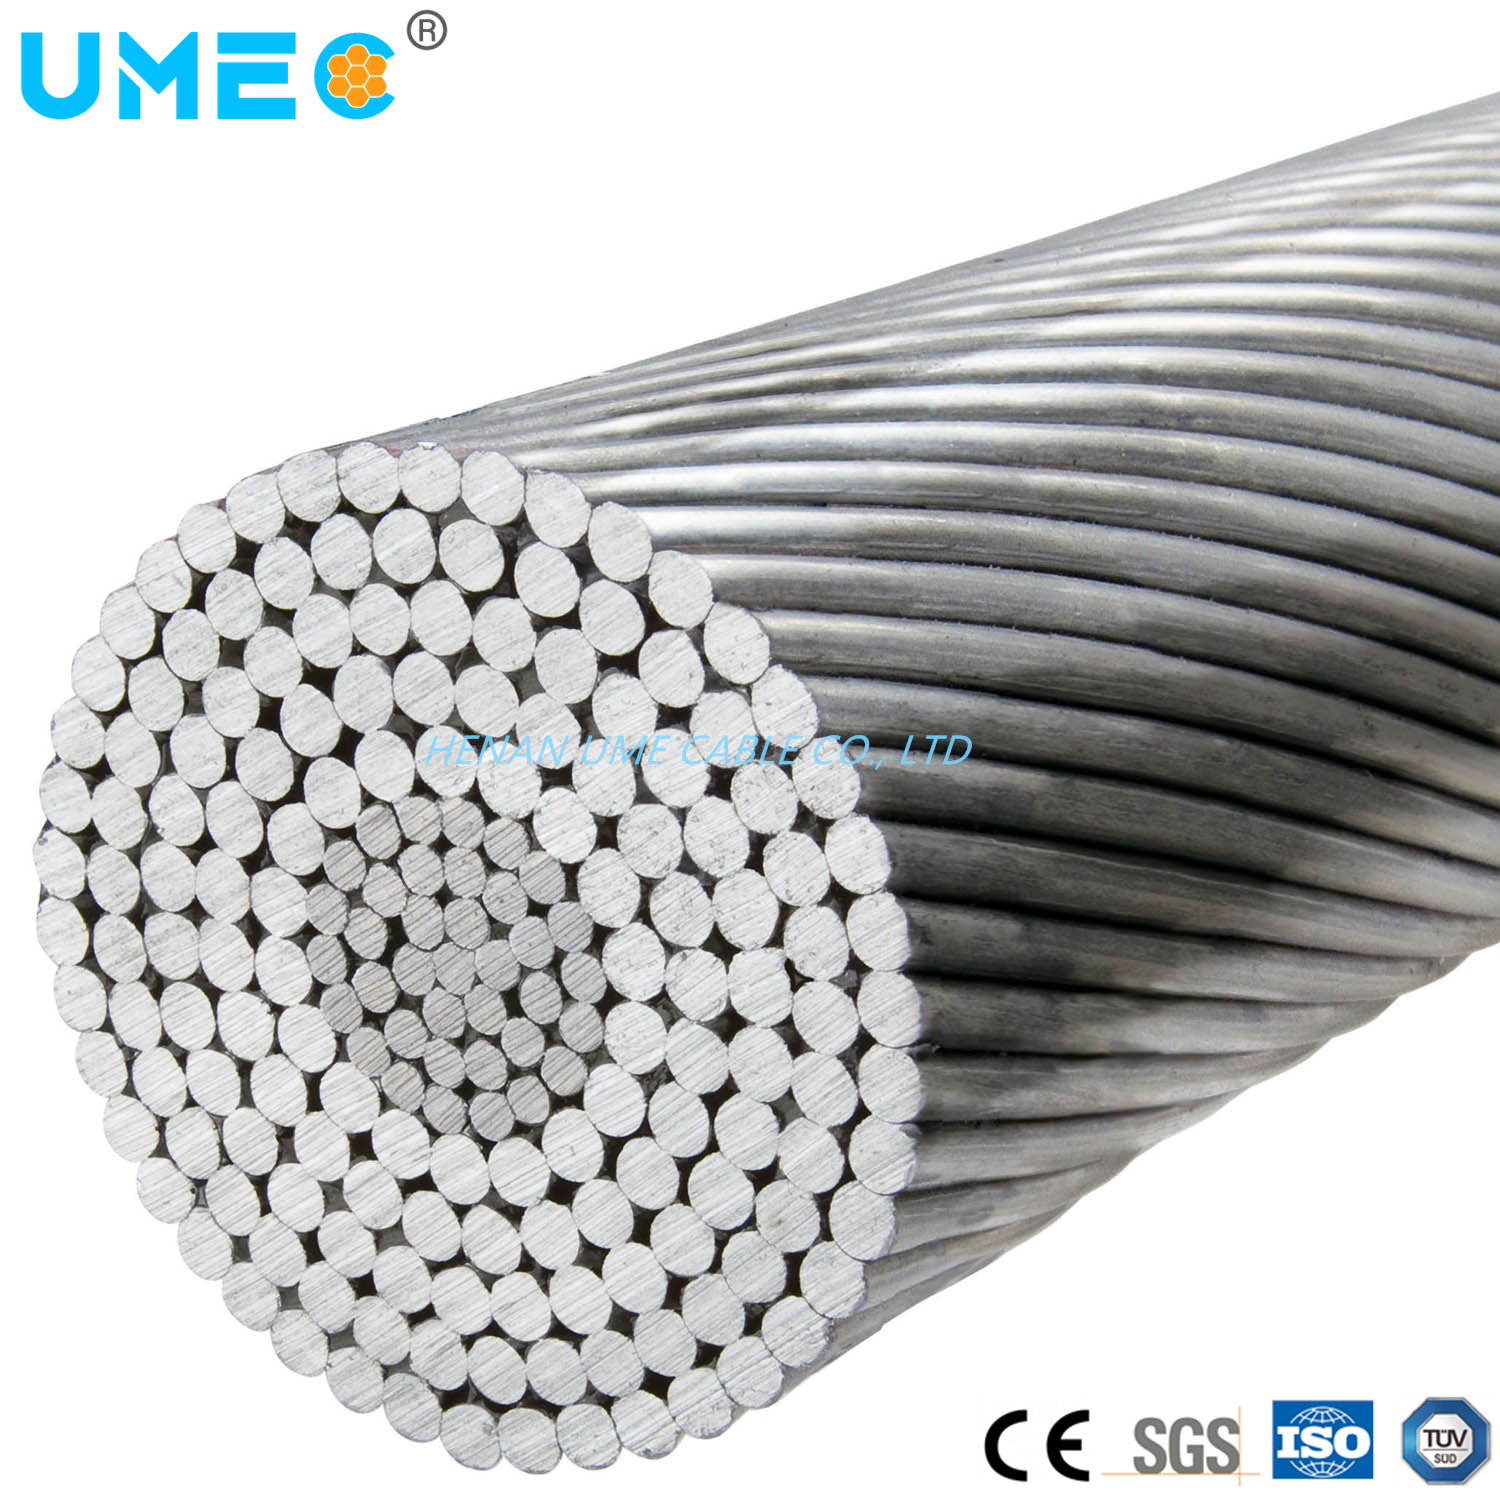 Overhead Line Cable Aluminum Conductor Steel Reinforced ACSR ACSR/Aw